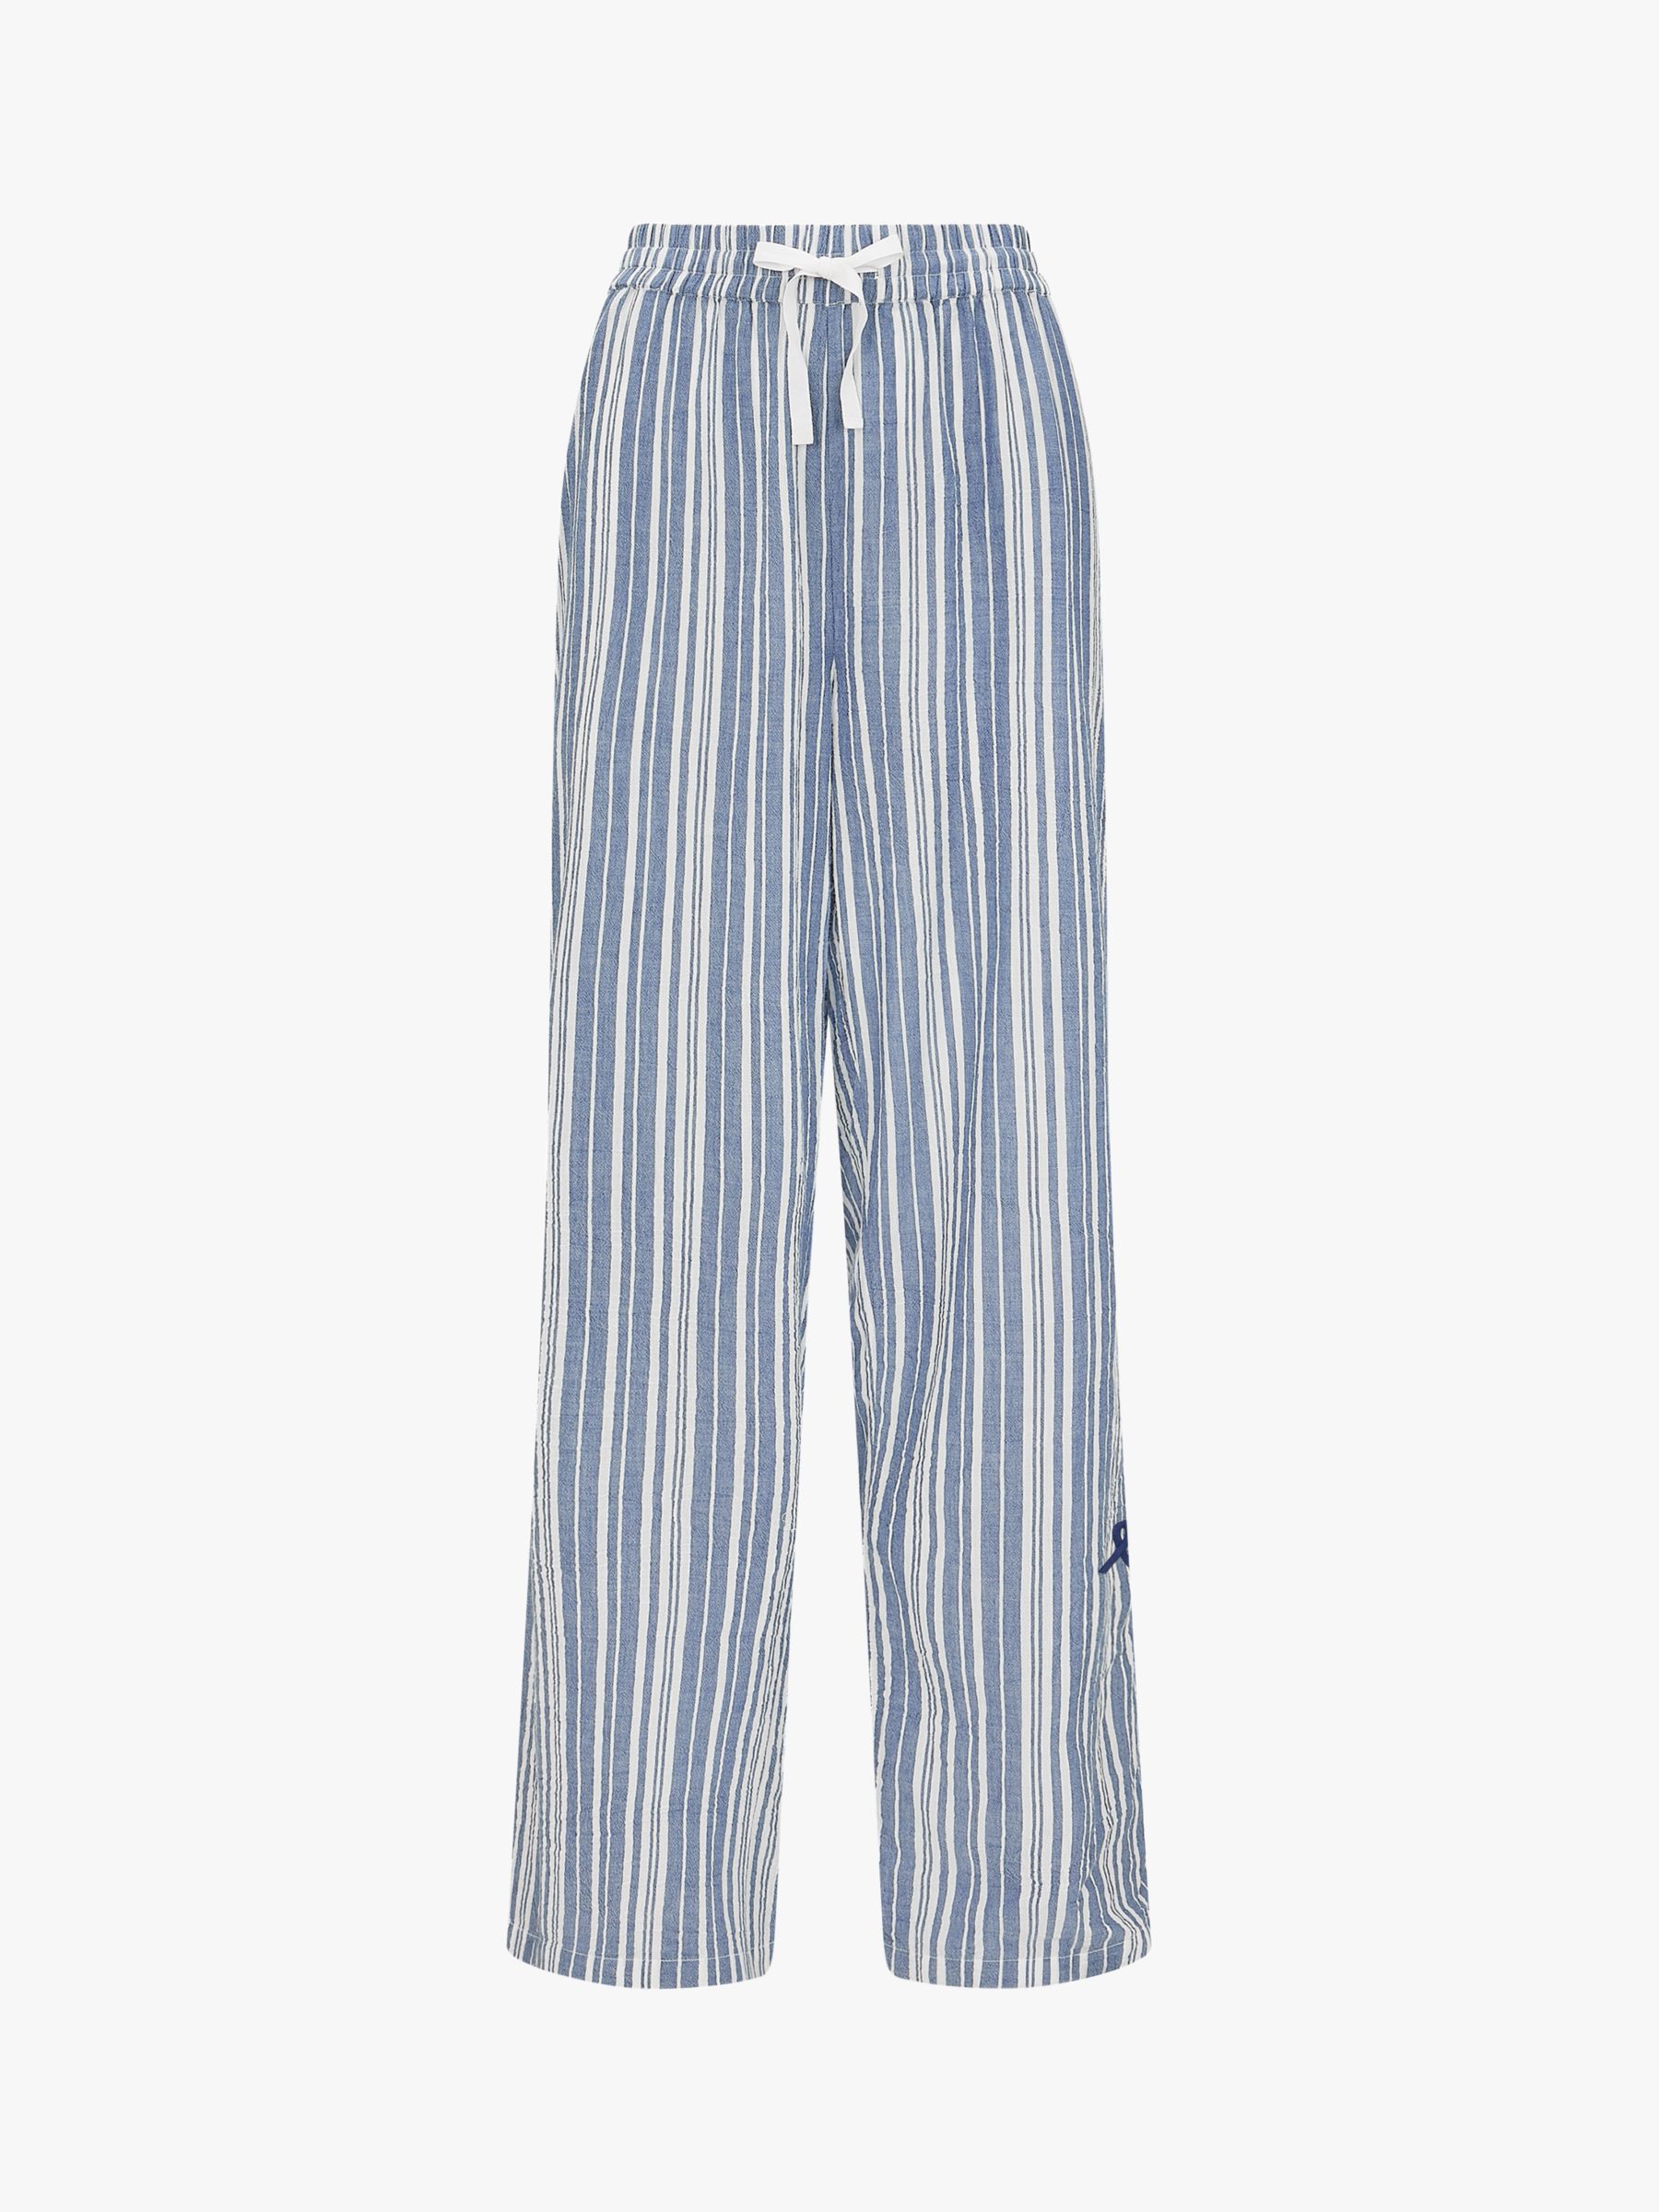 Nudea The PJ Trouser Pyjama Bottoms, White/Navy, XS Regular